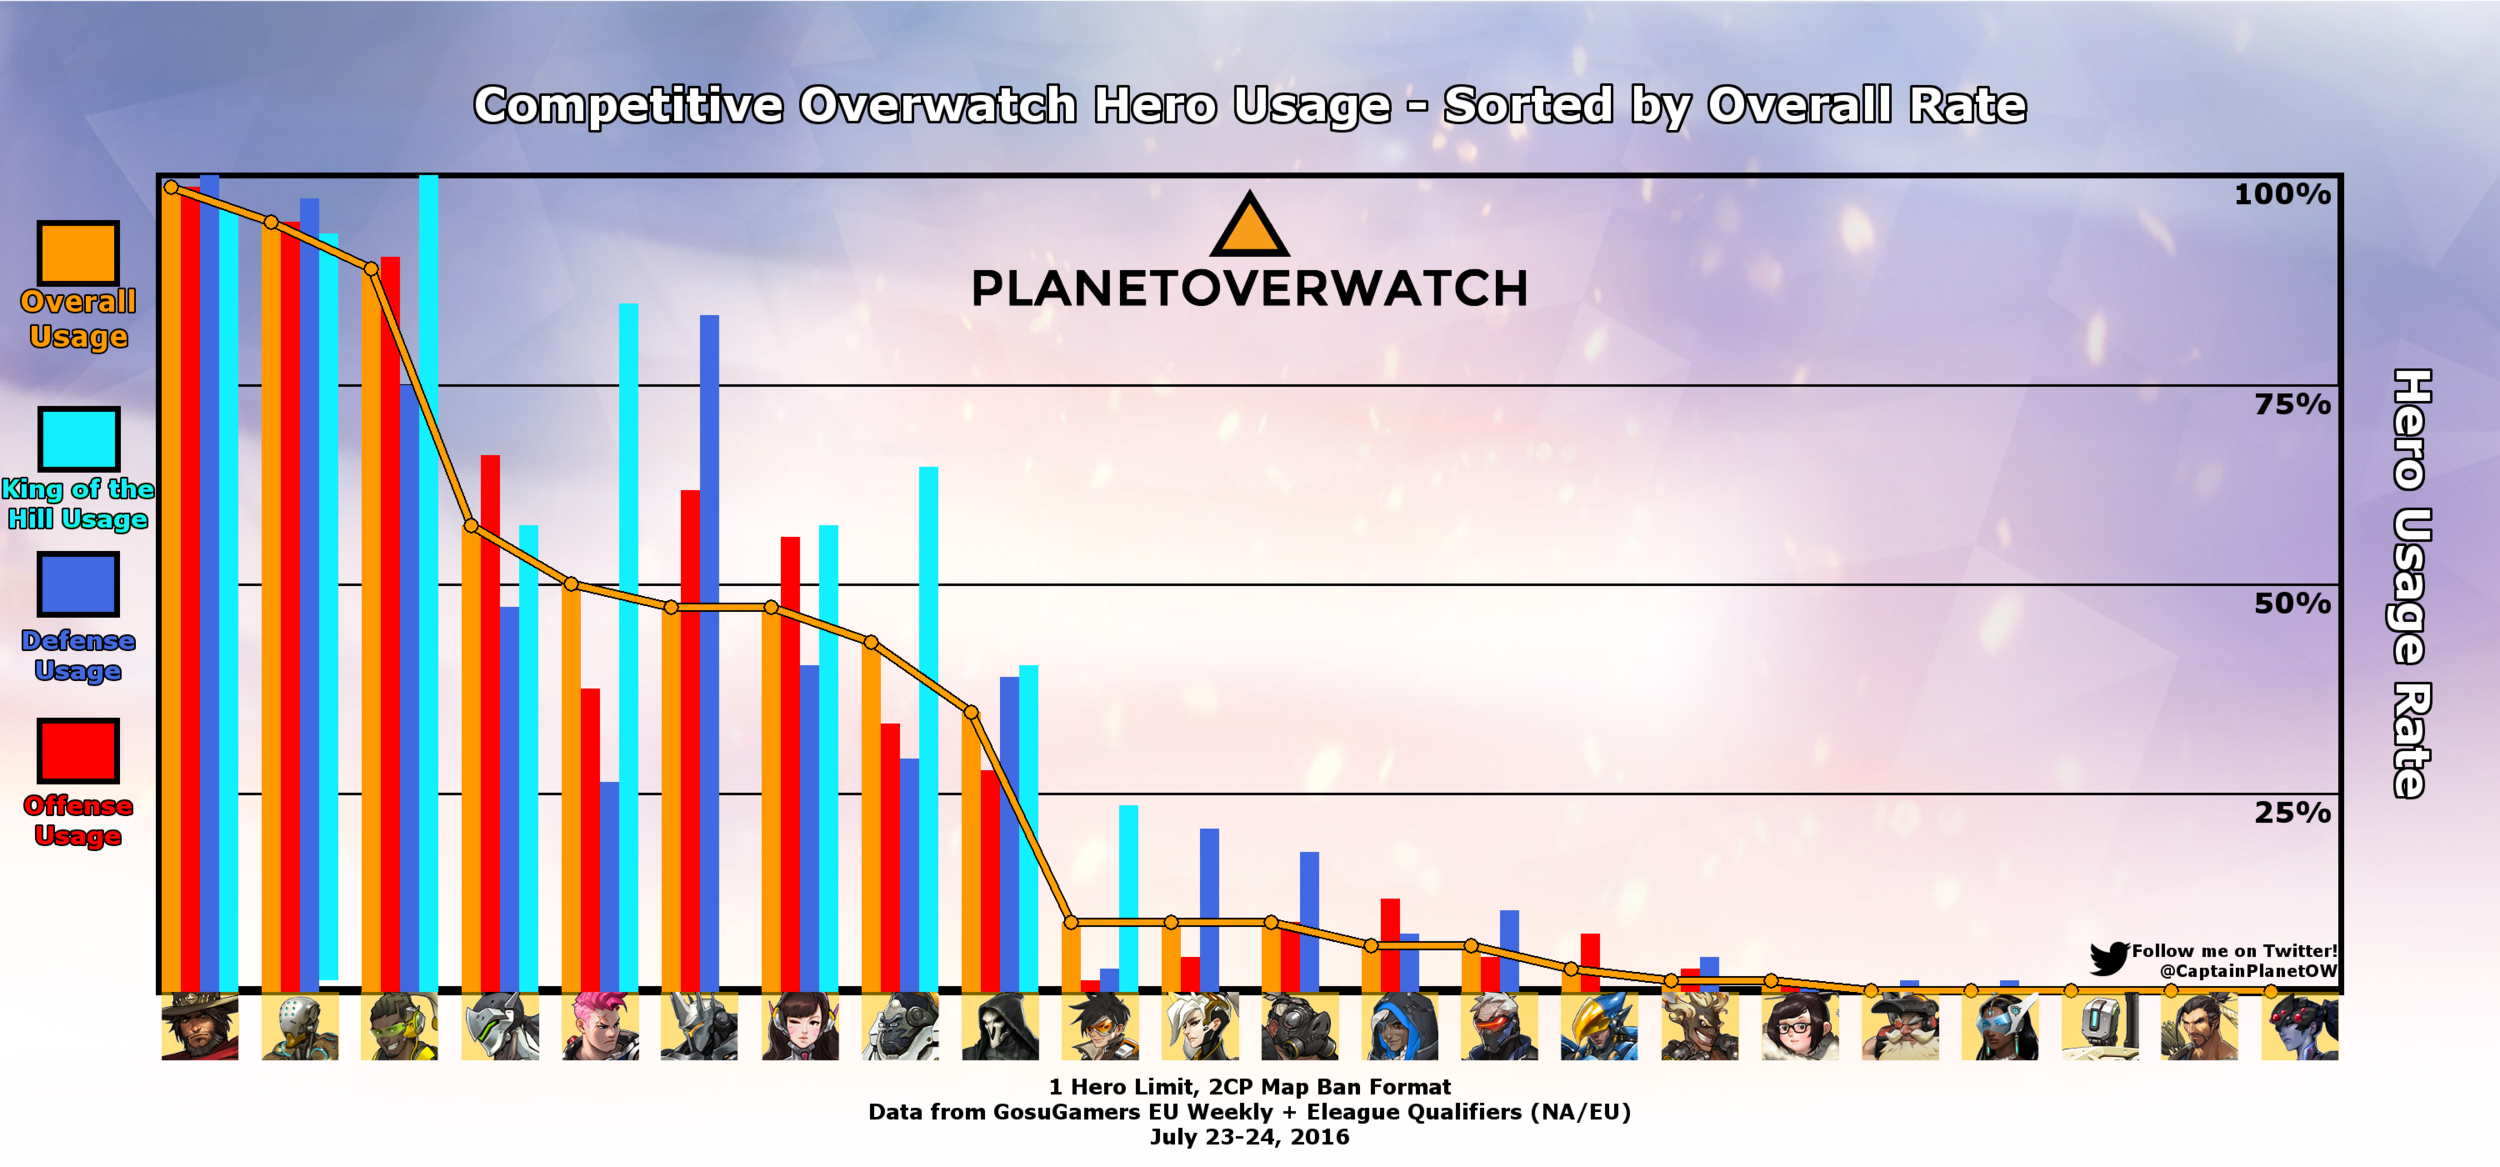 Overwatch 2 Season 7 DPS Heroes Tier List